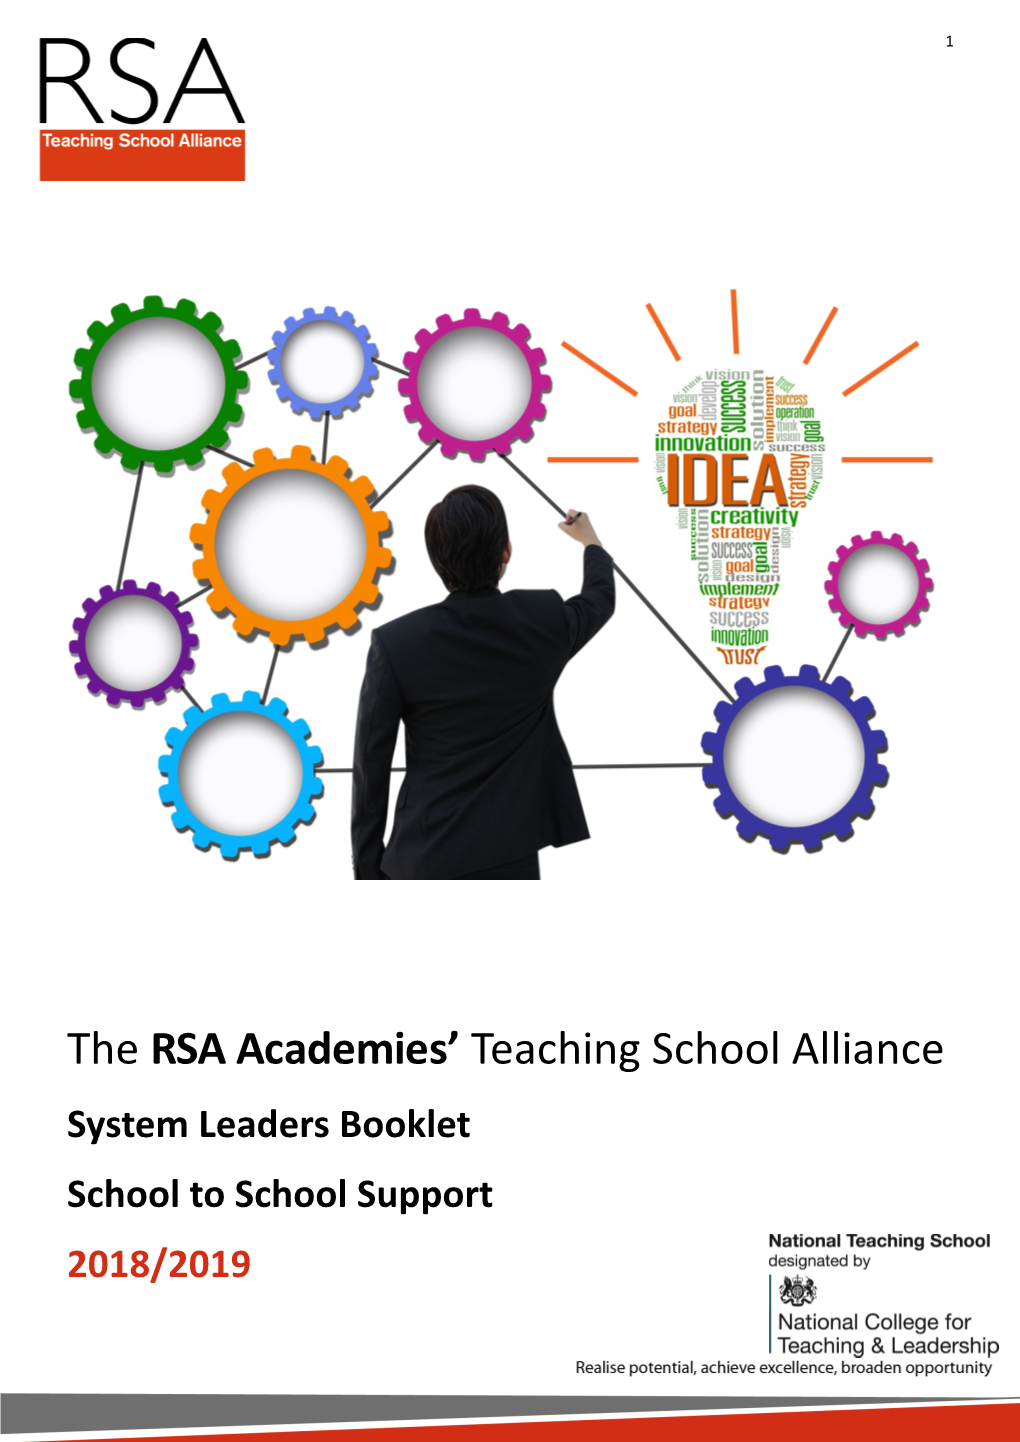 The RSA Academies' Teaching School Alliance